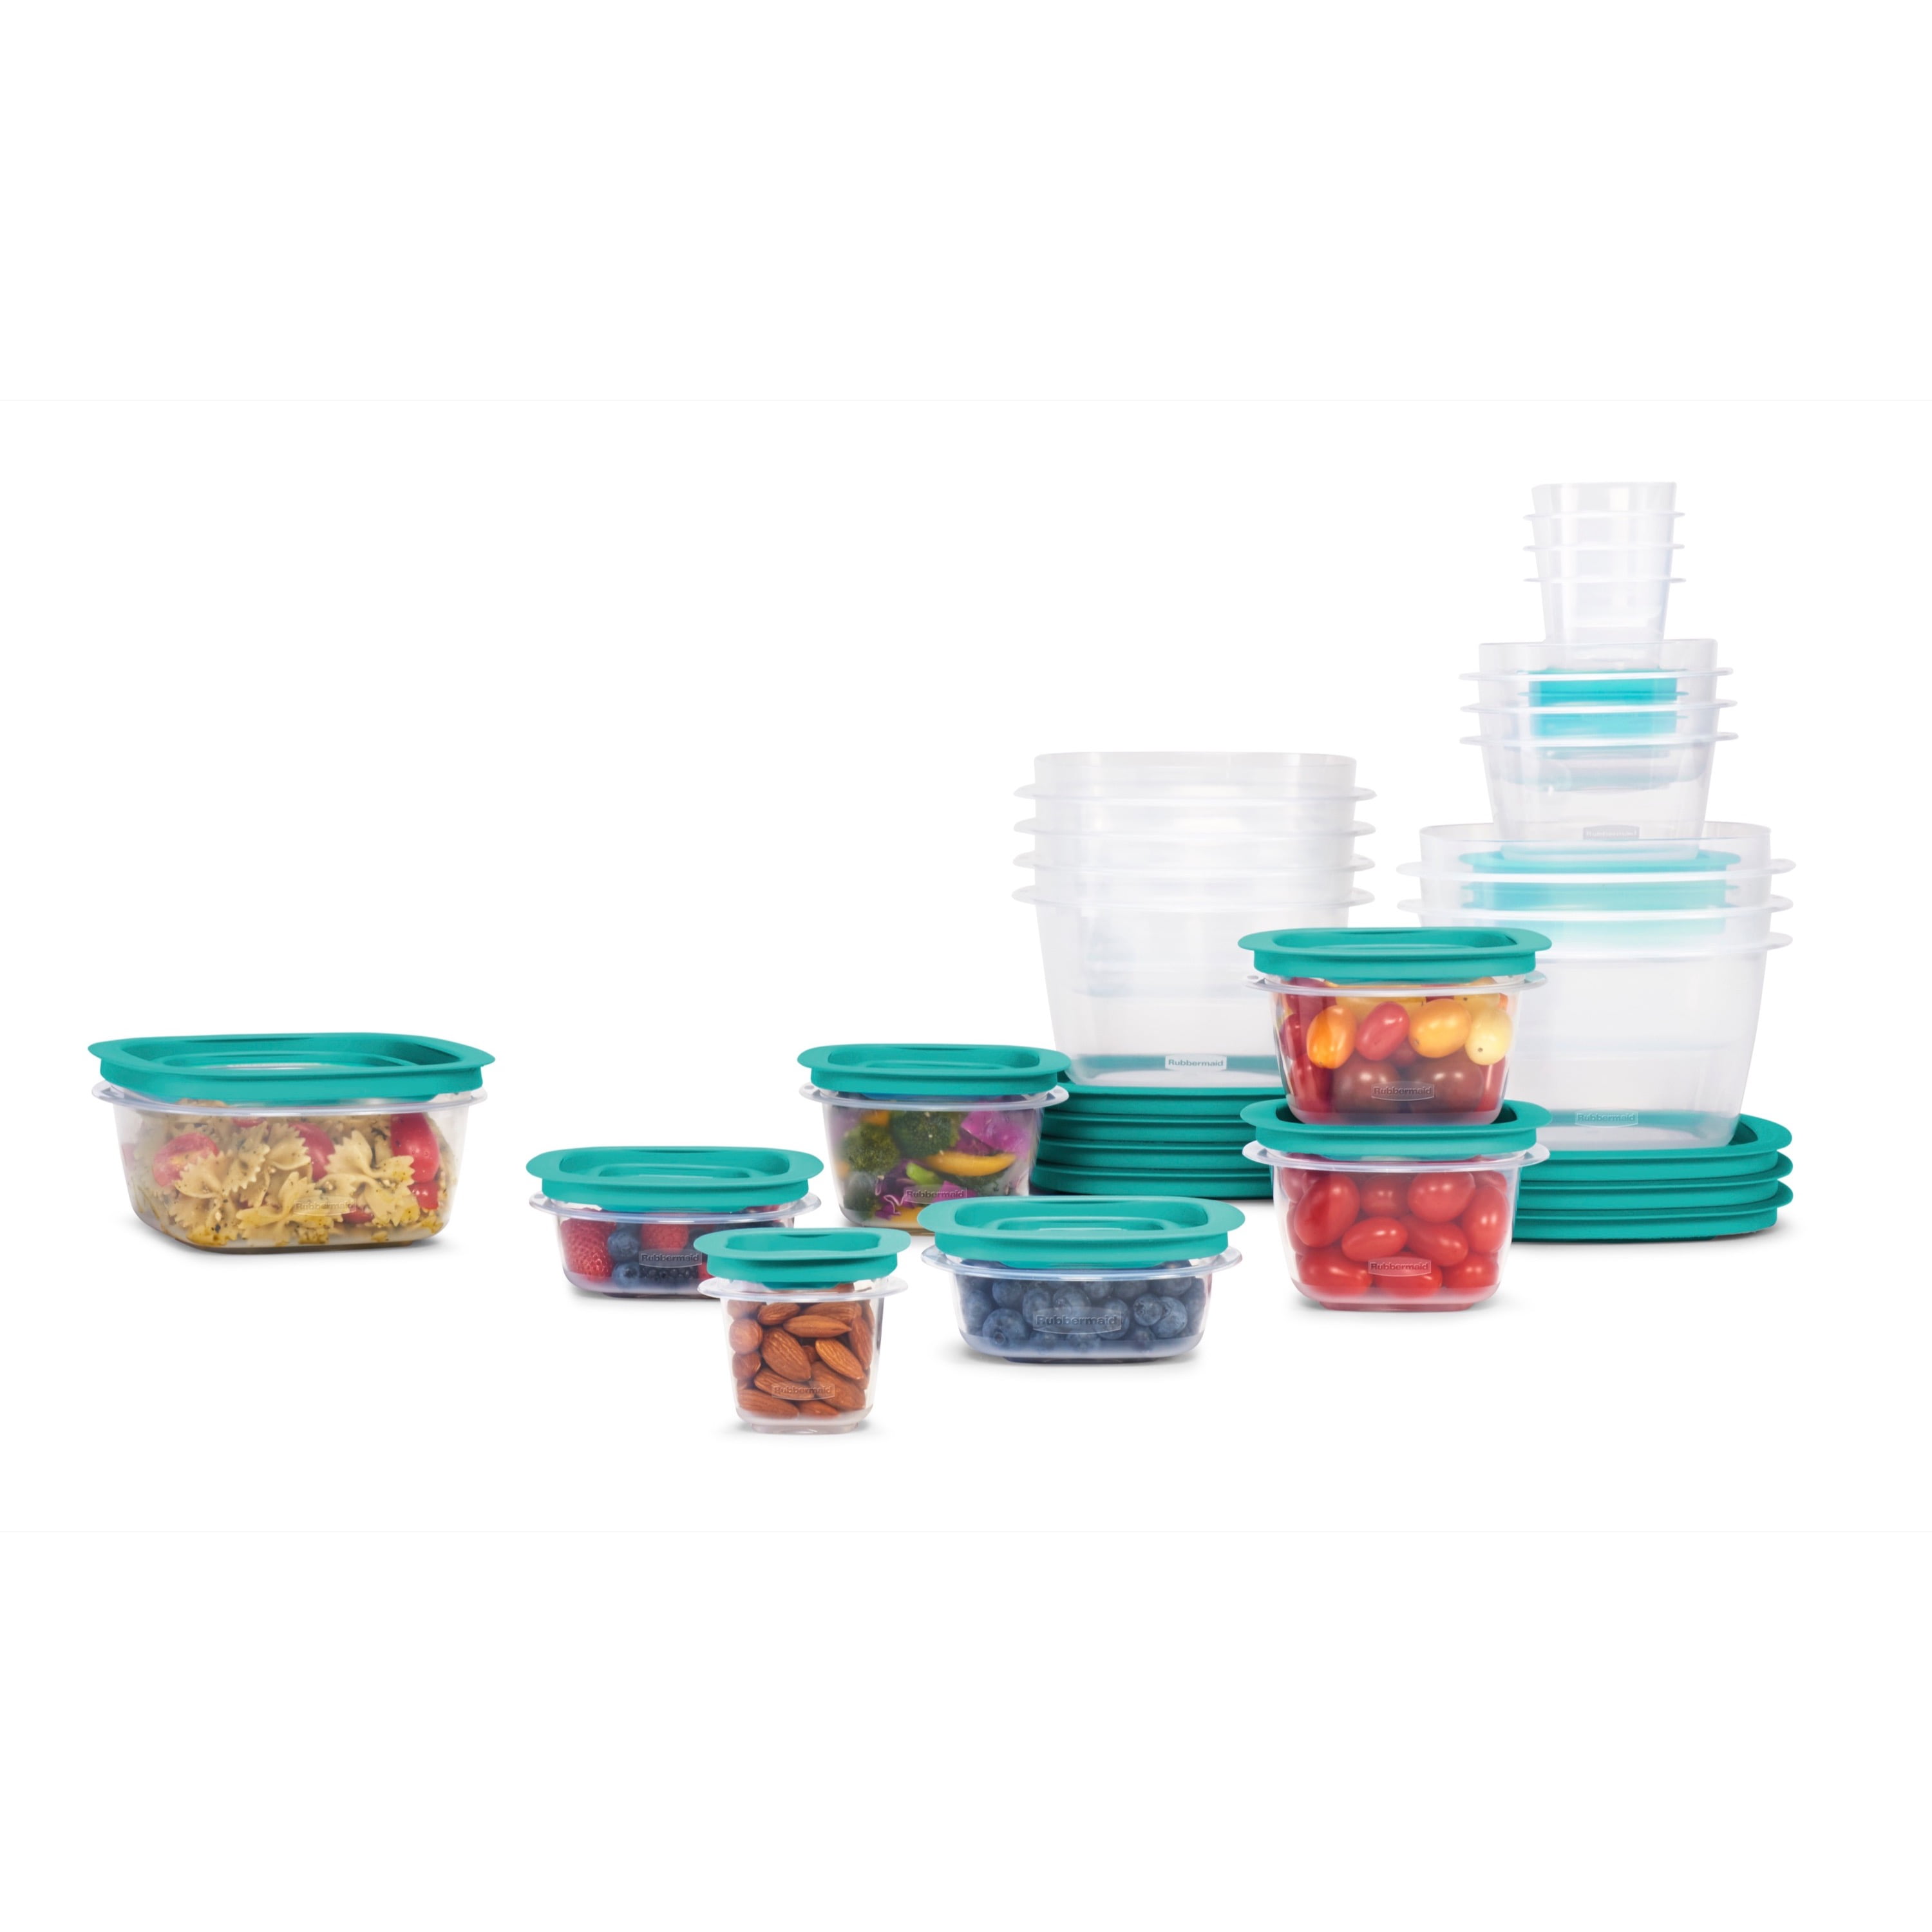 Utensilux Rubbermaid Storage Containers, Easy Find Lids, Teal, 7 cup, Flex  & Seal, Leak Proof Lids, Food Storage Set, Clear Meal Prep Flex Containers